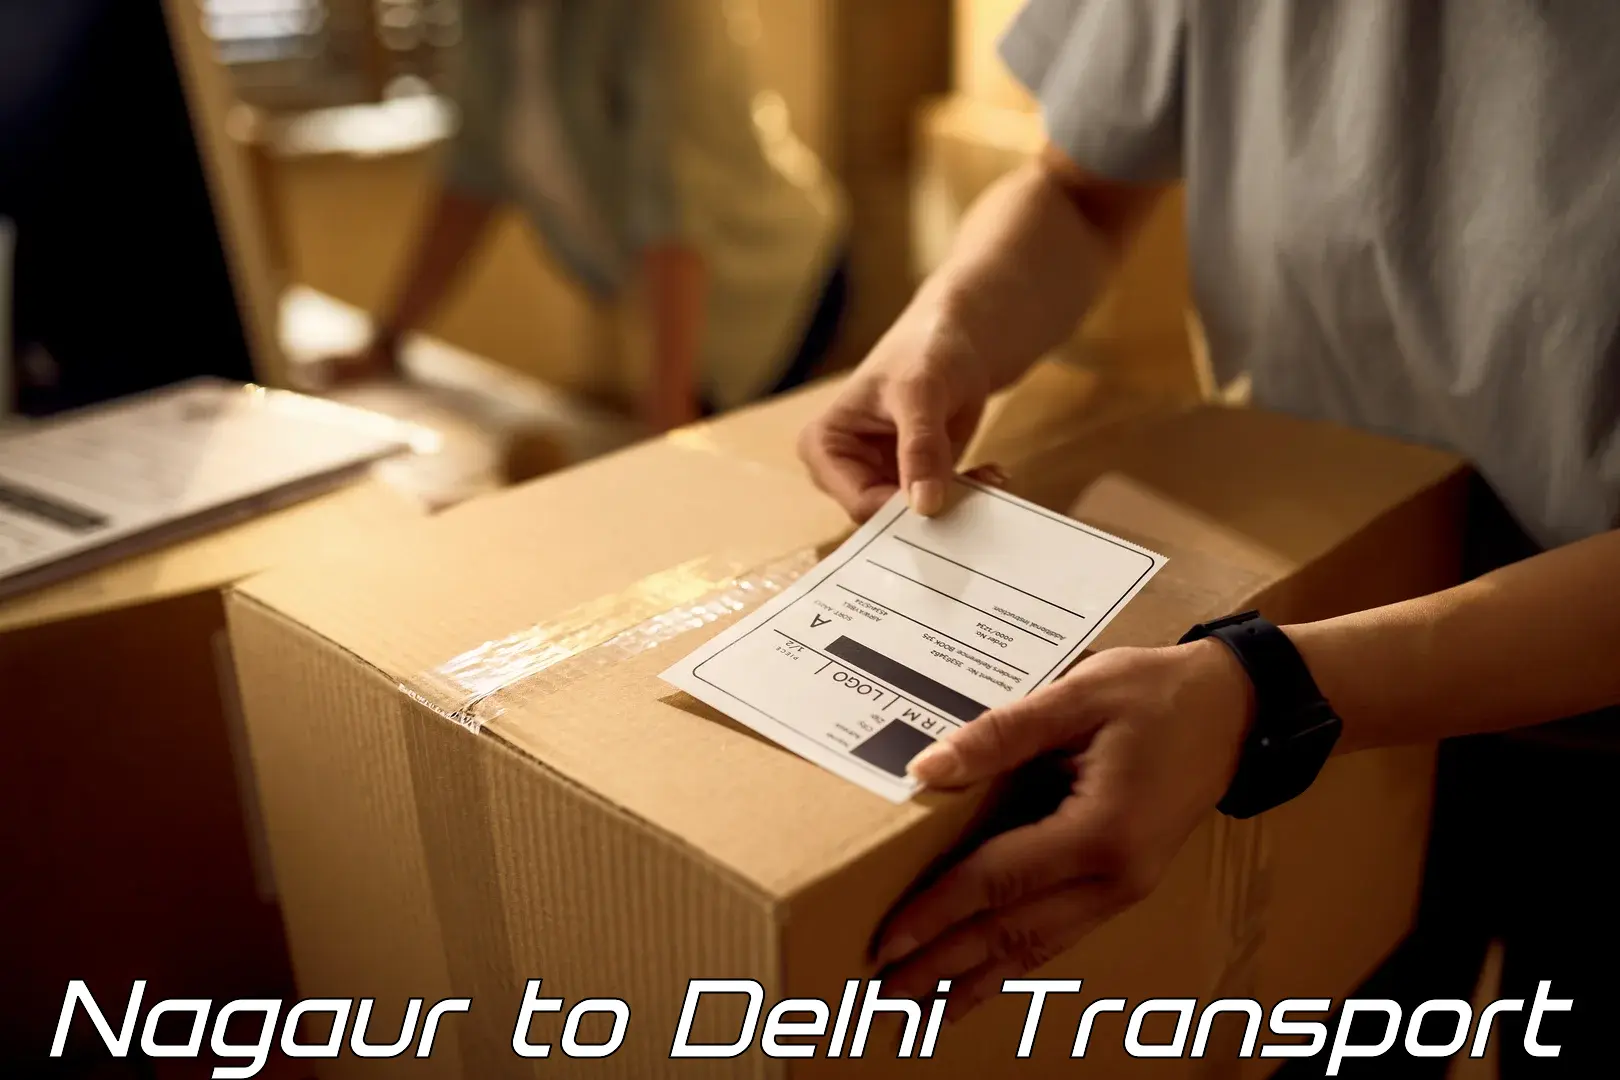 Container transport service Nagaur to University of Delhi